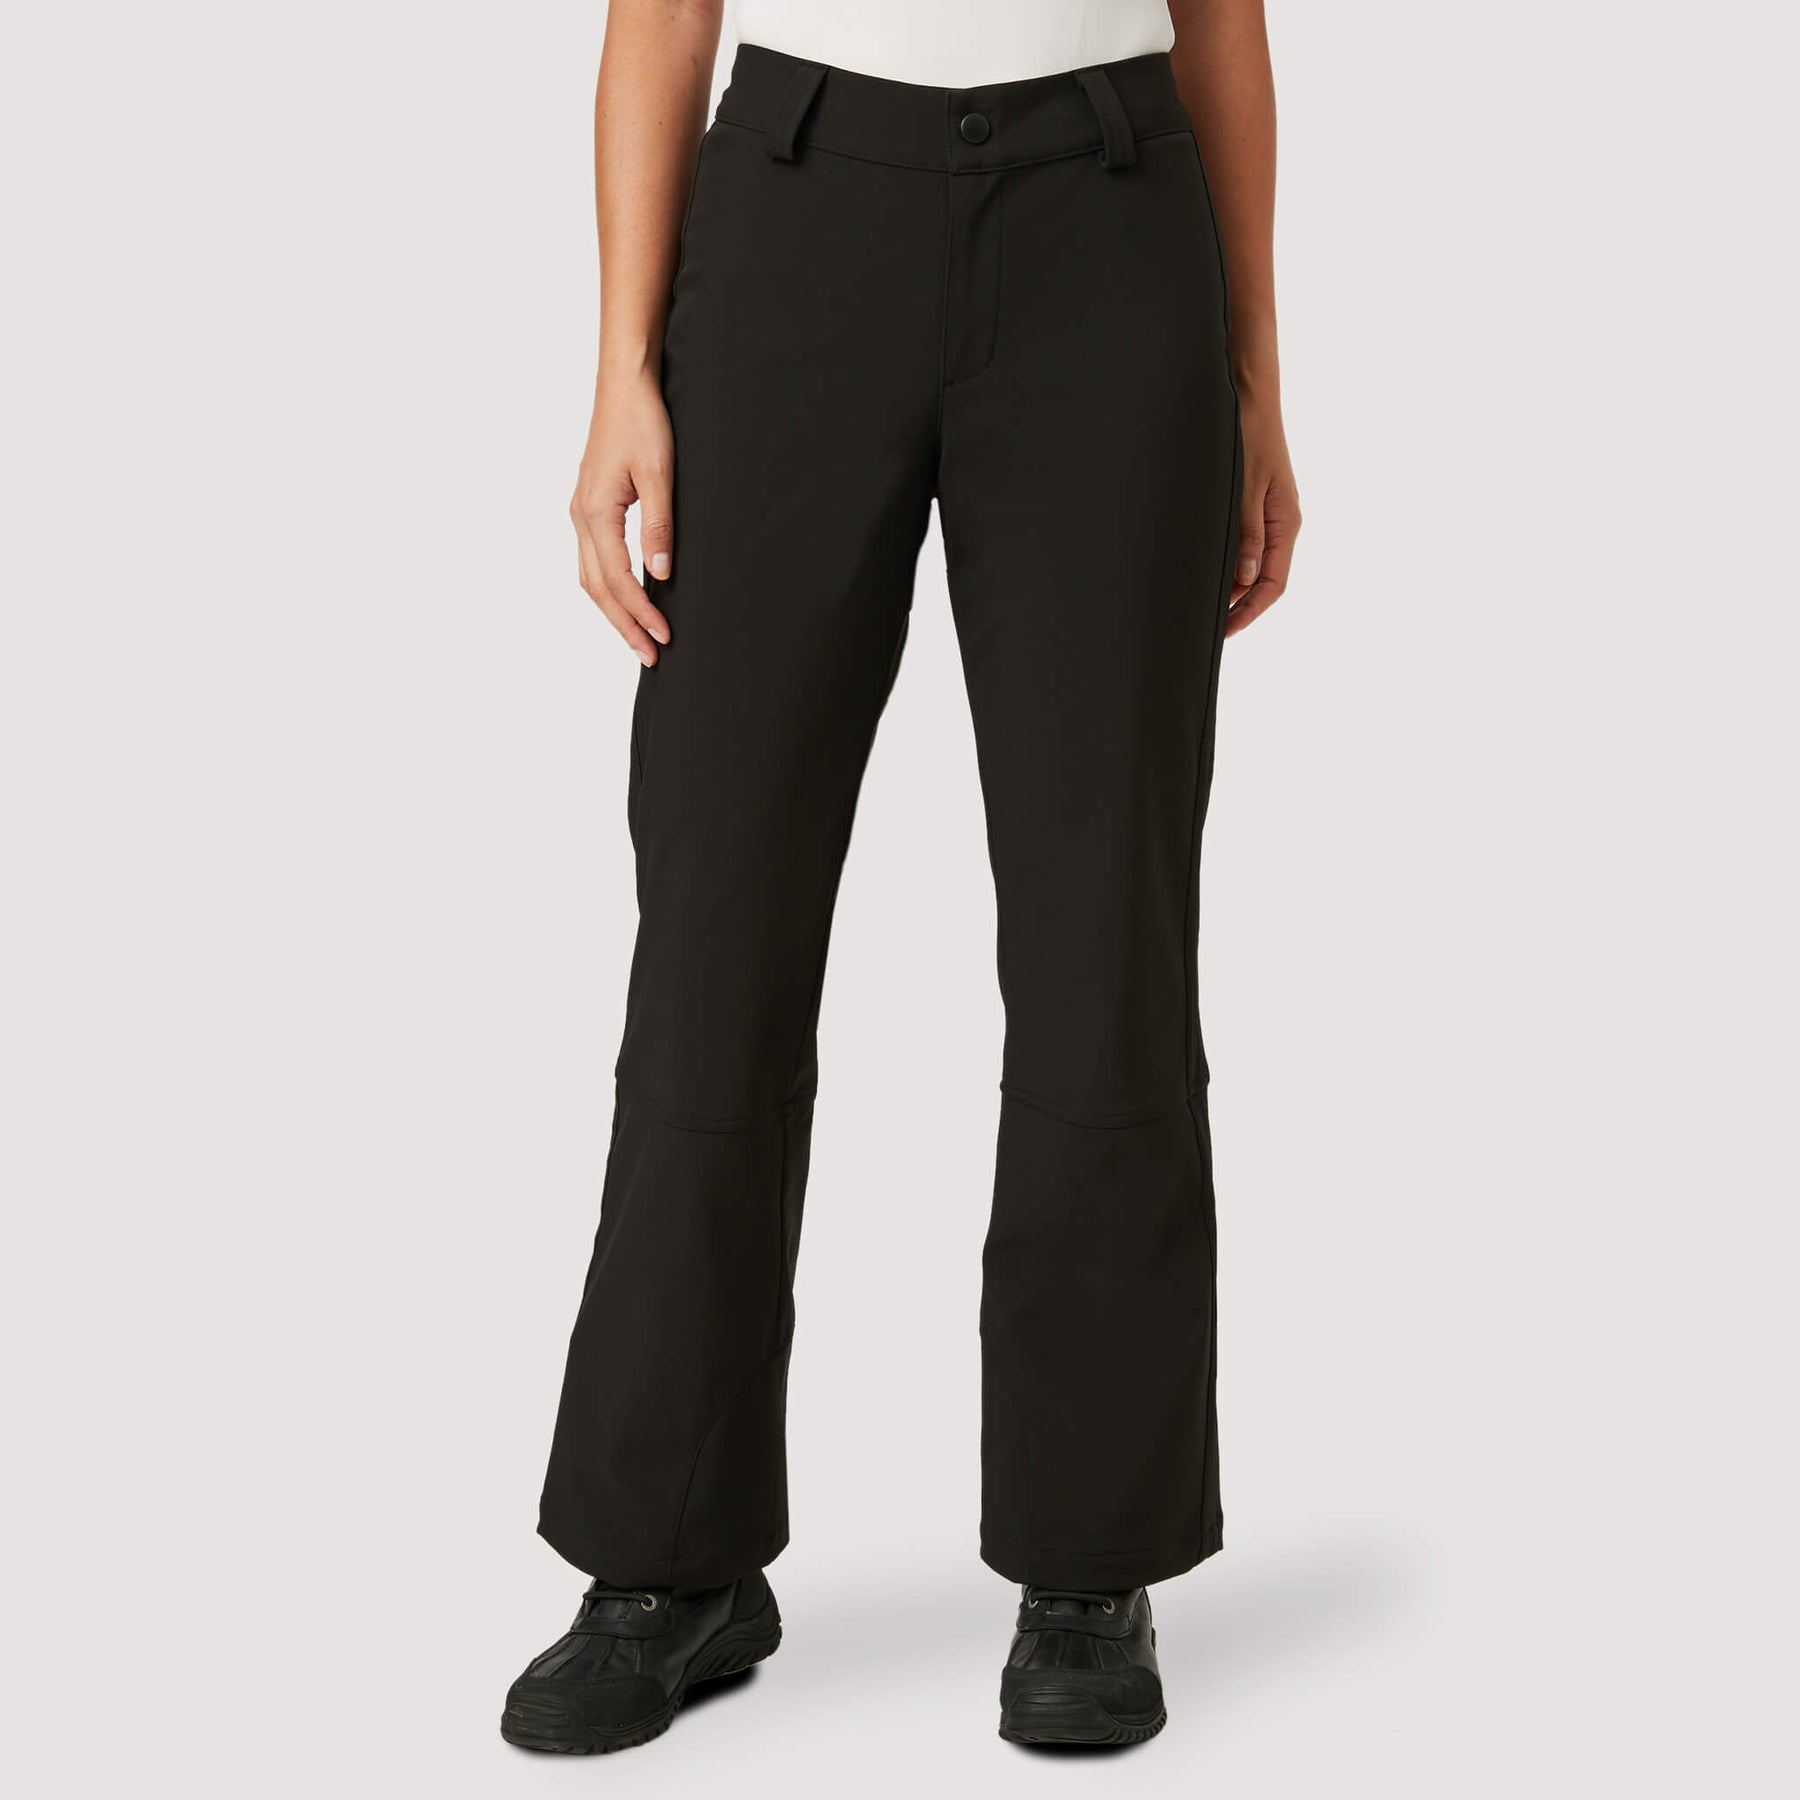 Apex STH Pants - Women's Short Sizes